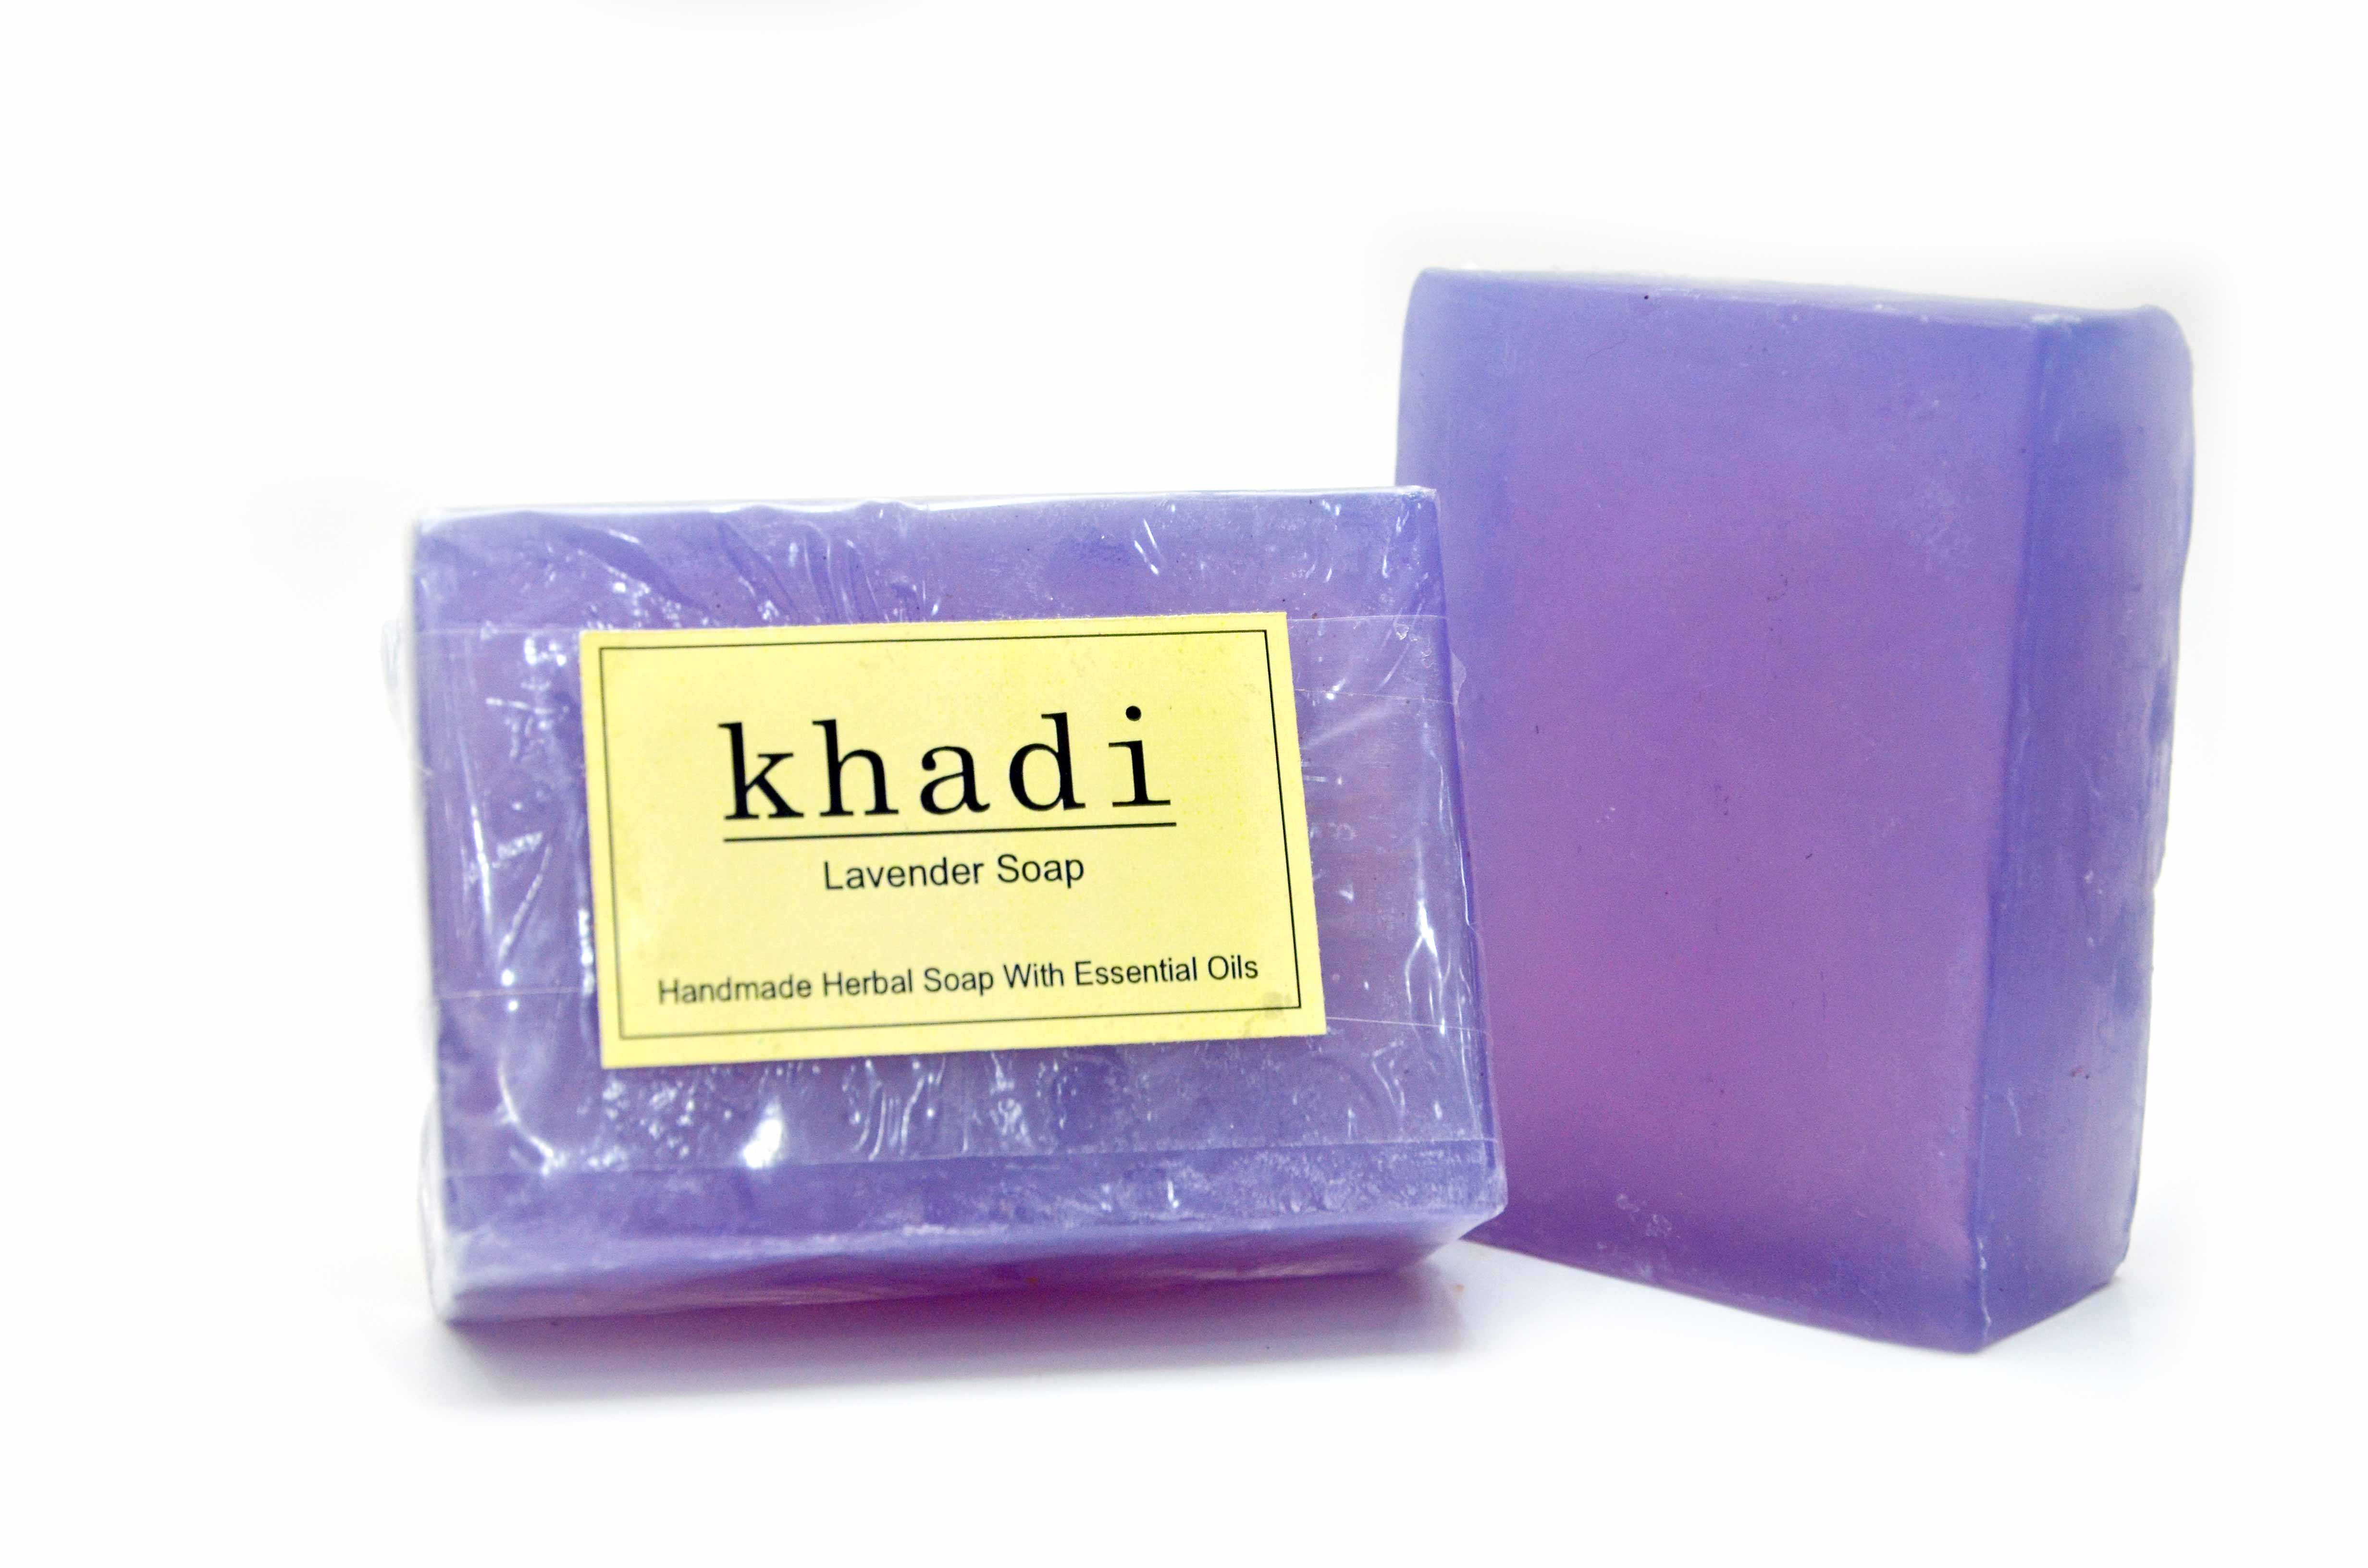 Buy Vagad's Khadi Lavender Soap at Best Price Online